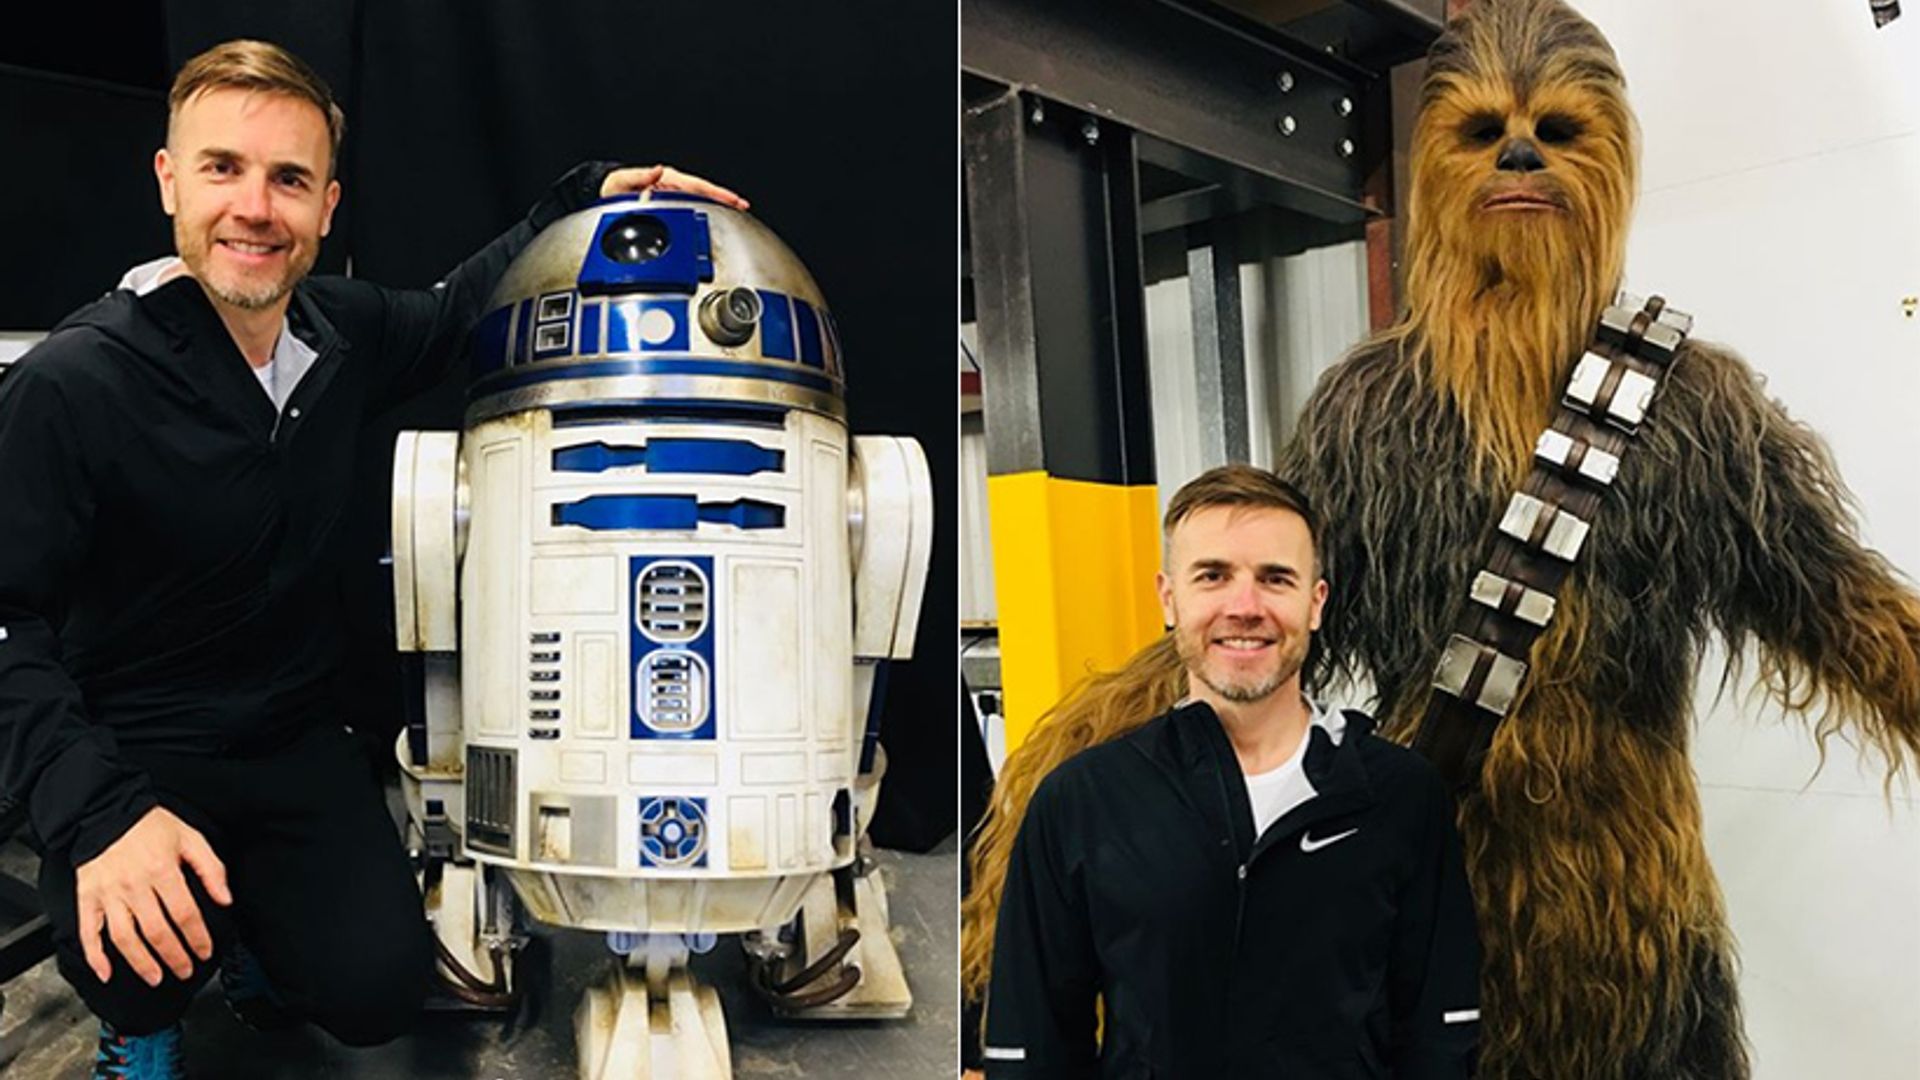 Gary Barlow shares photos from Star Wars set following his cameo